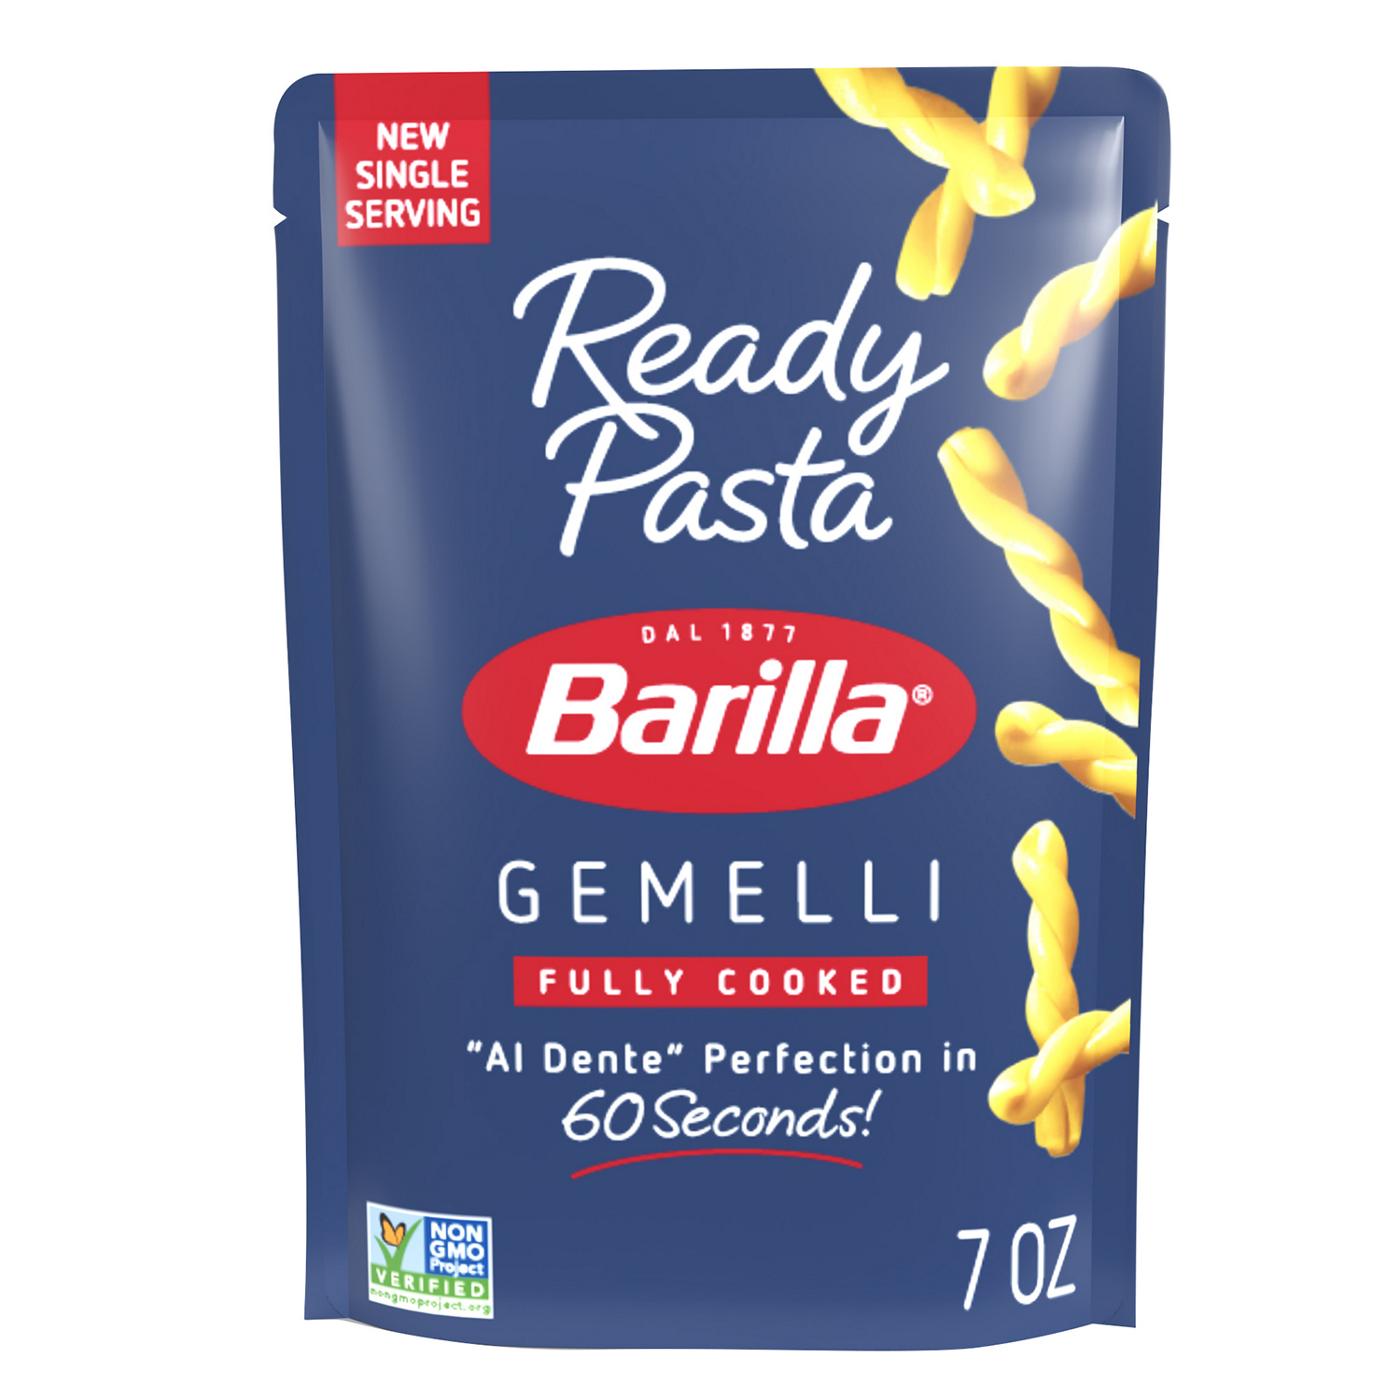 Barilla Ready Pasta Gemelli; image 1 of 5